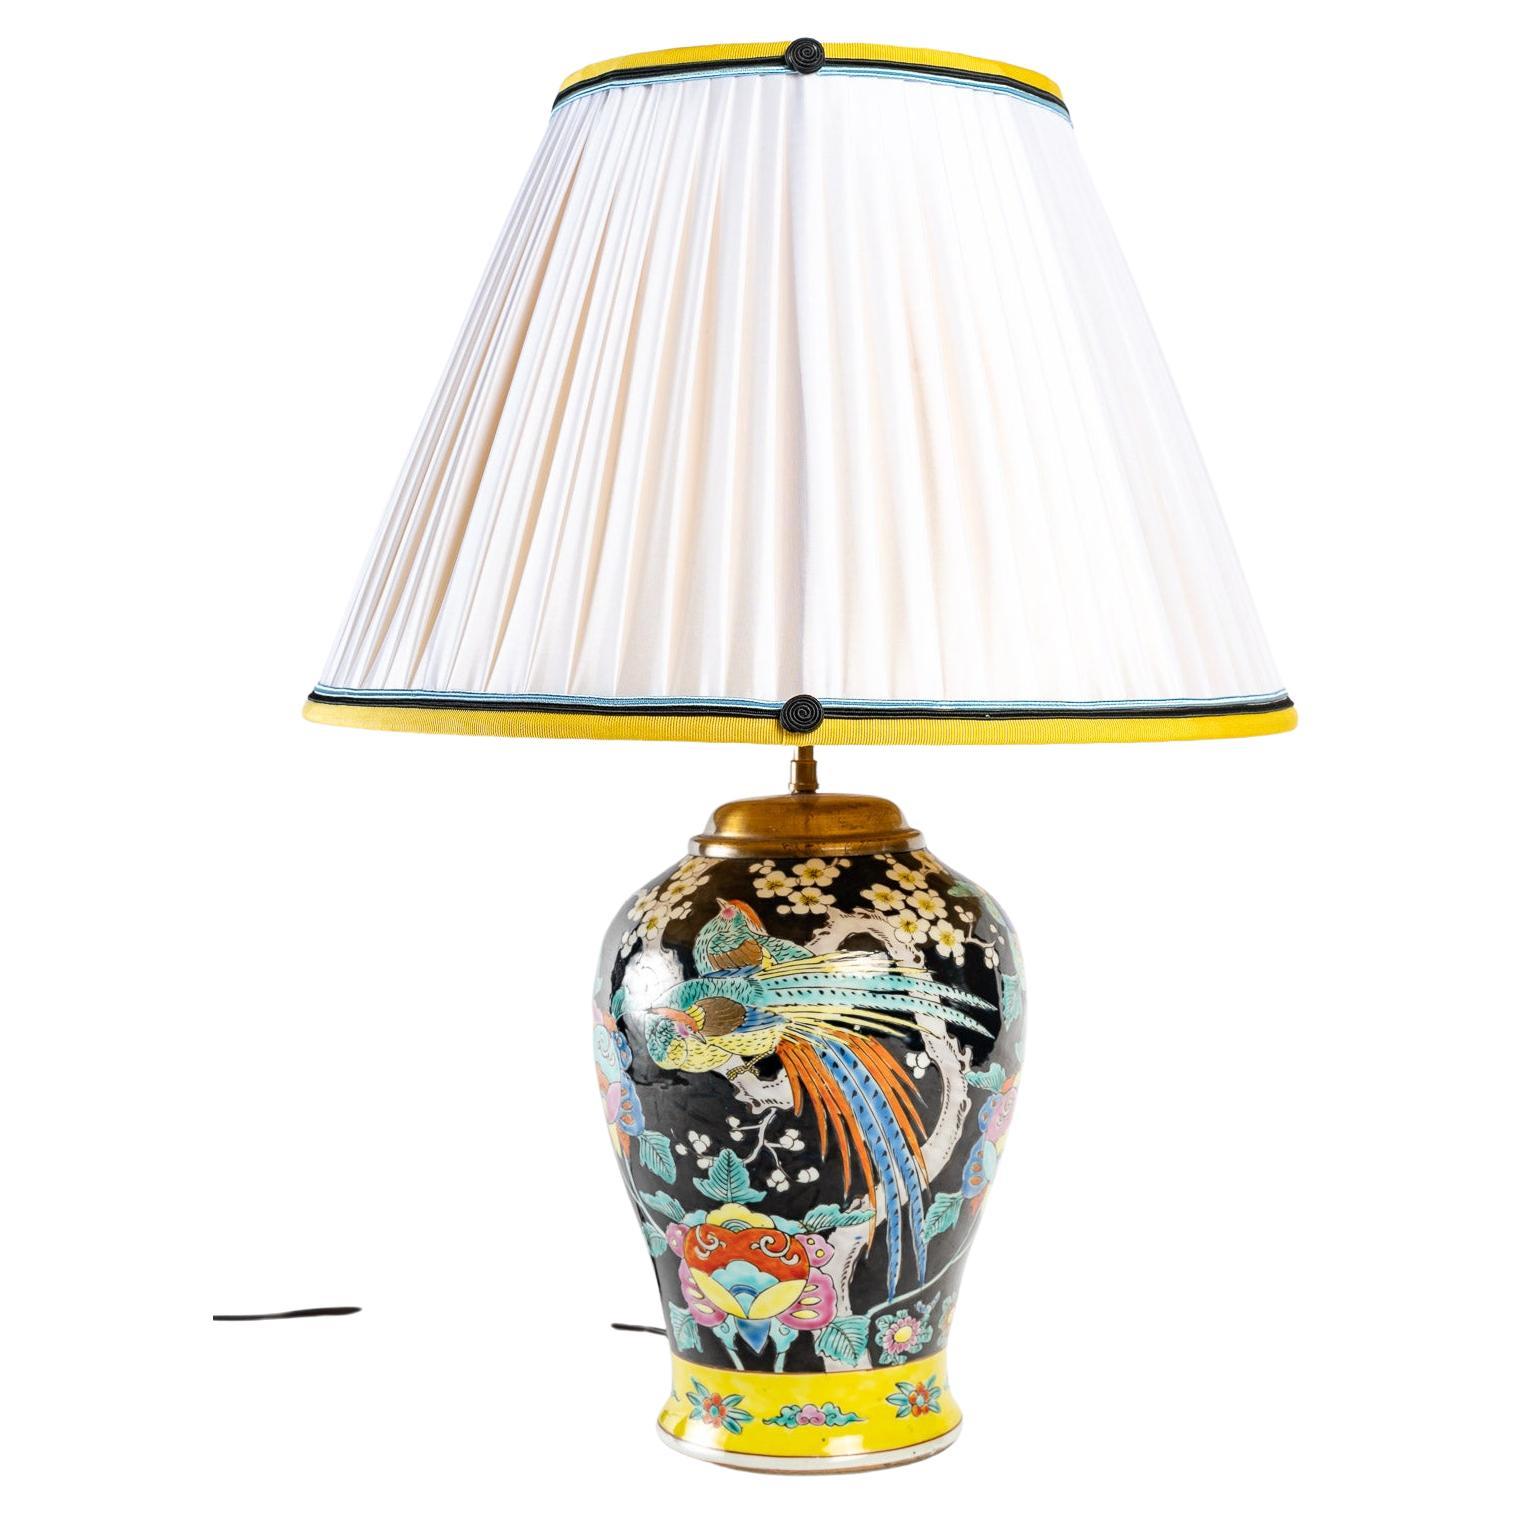 Japanese Table Lamp